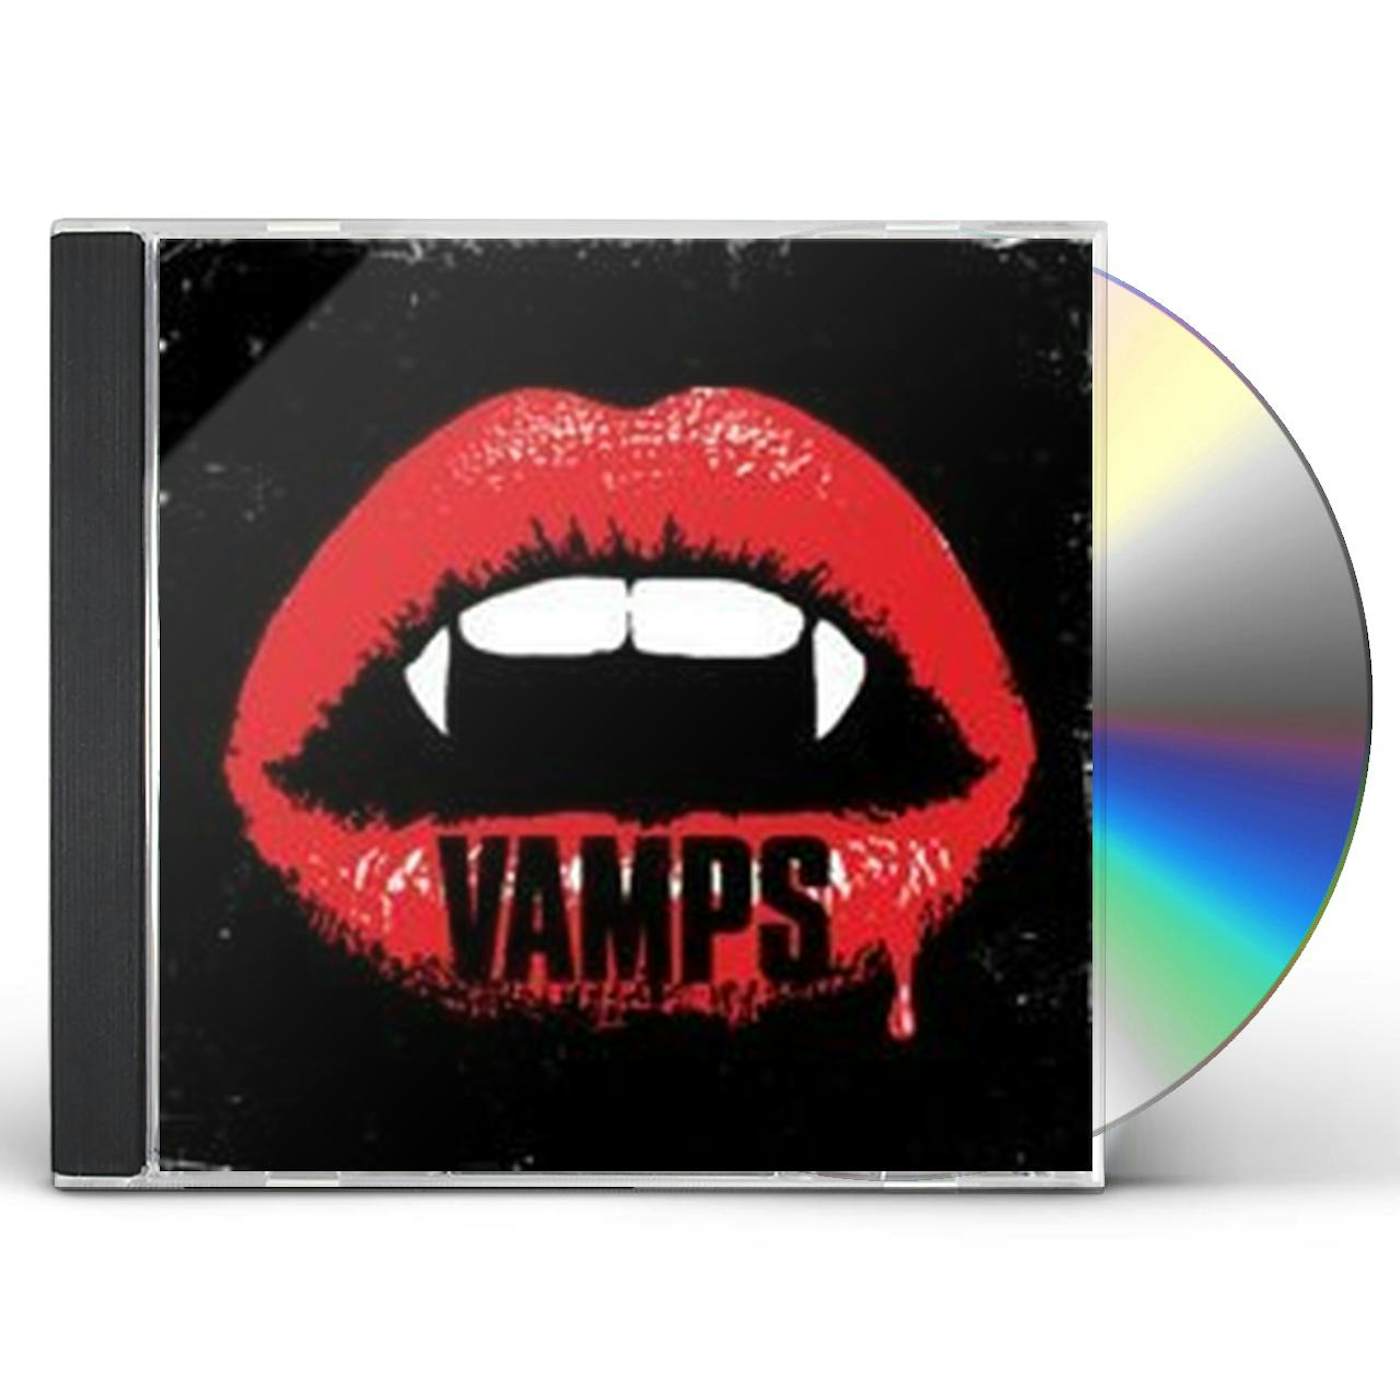 The Vamps VAMPLS CD